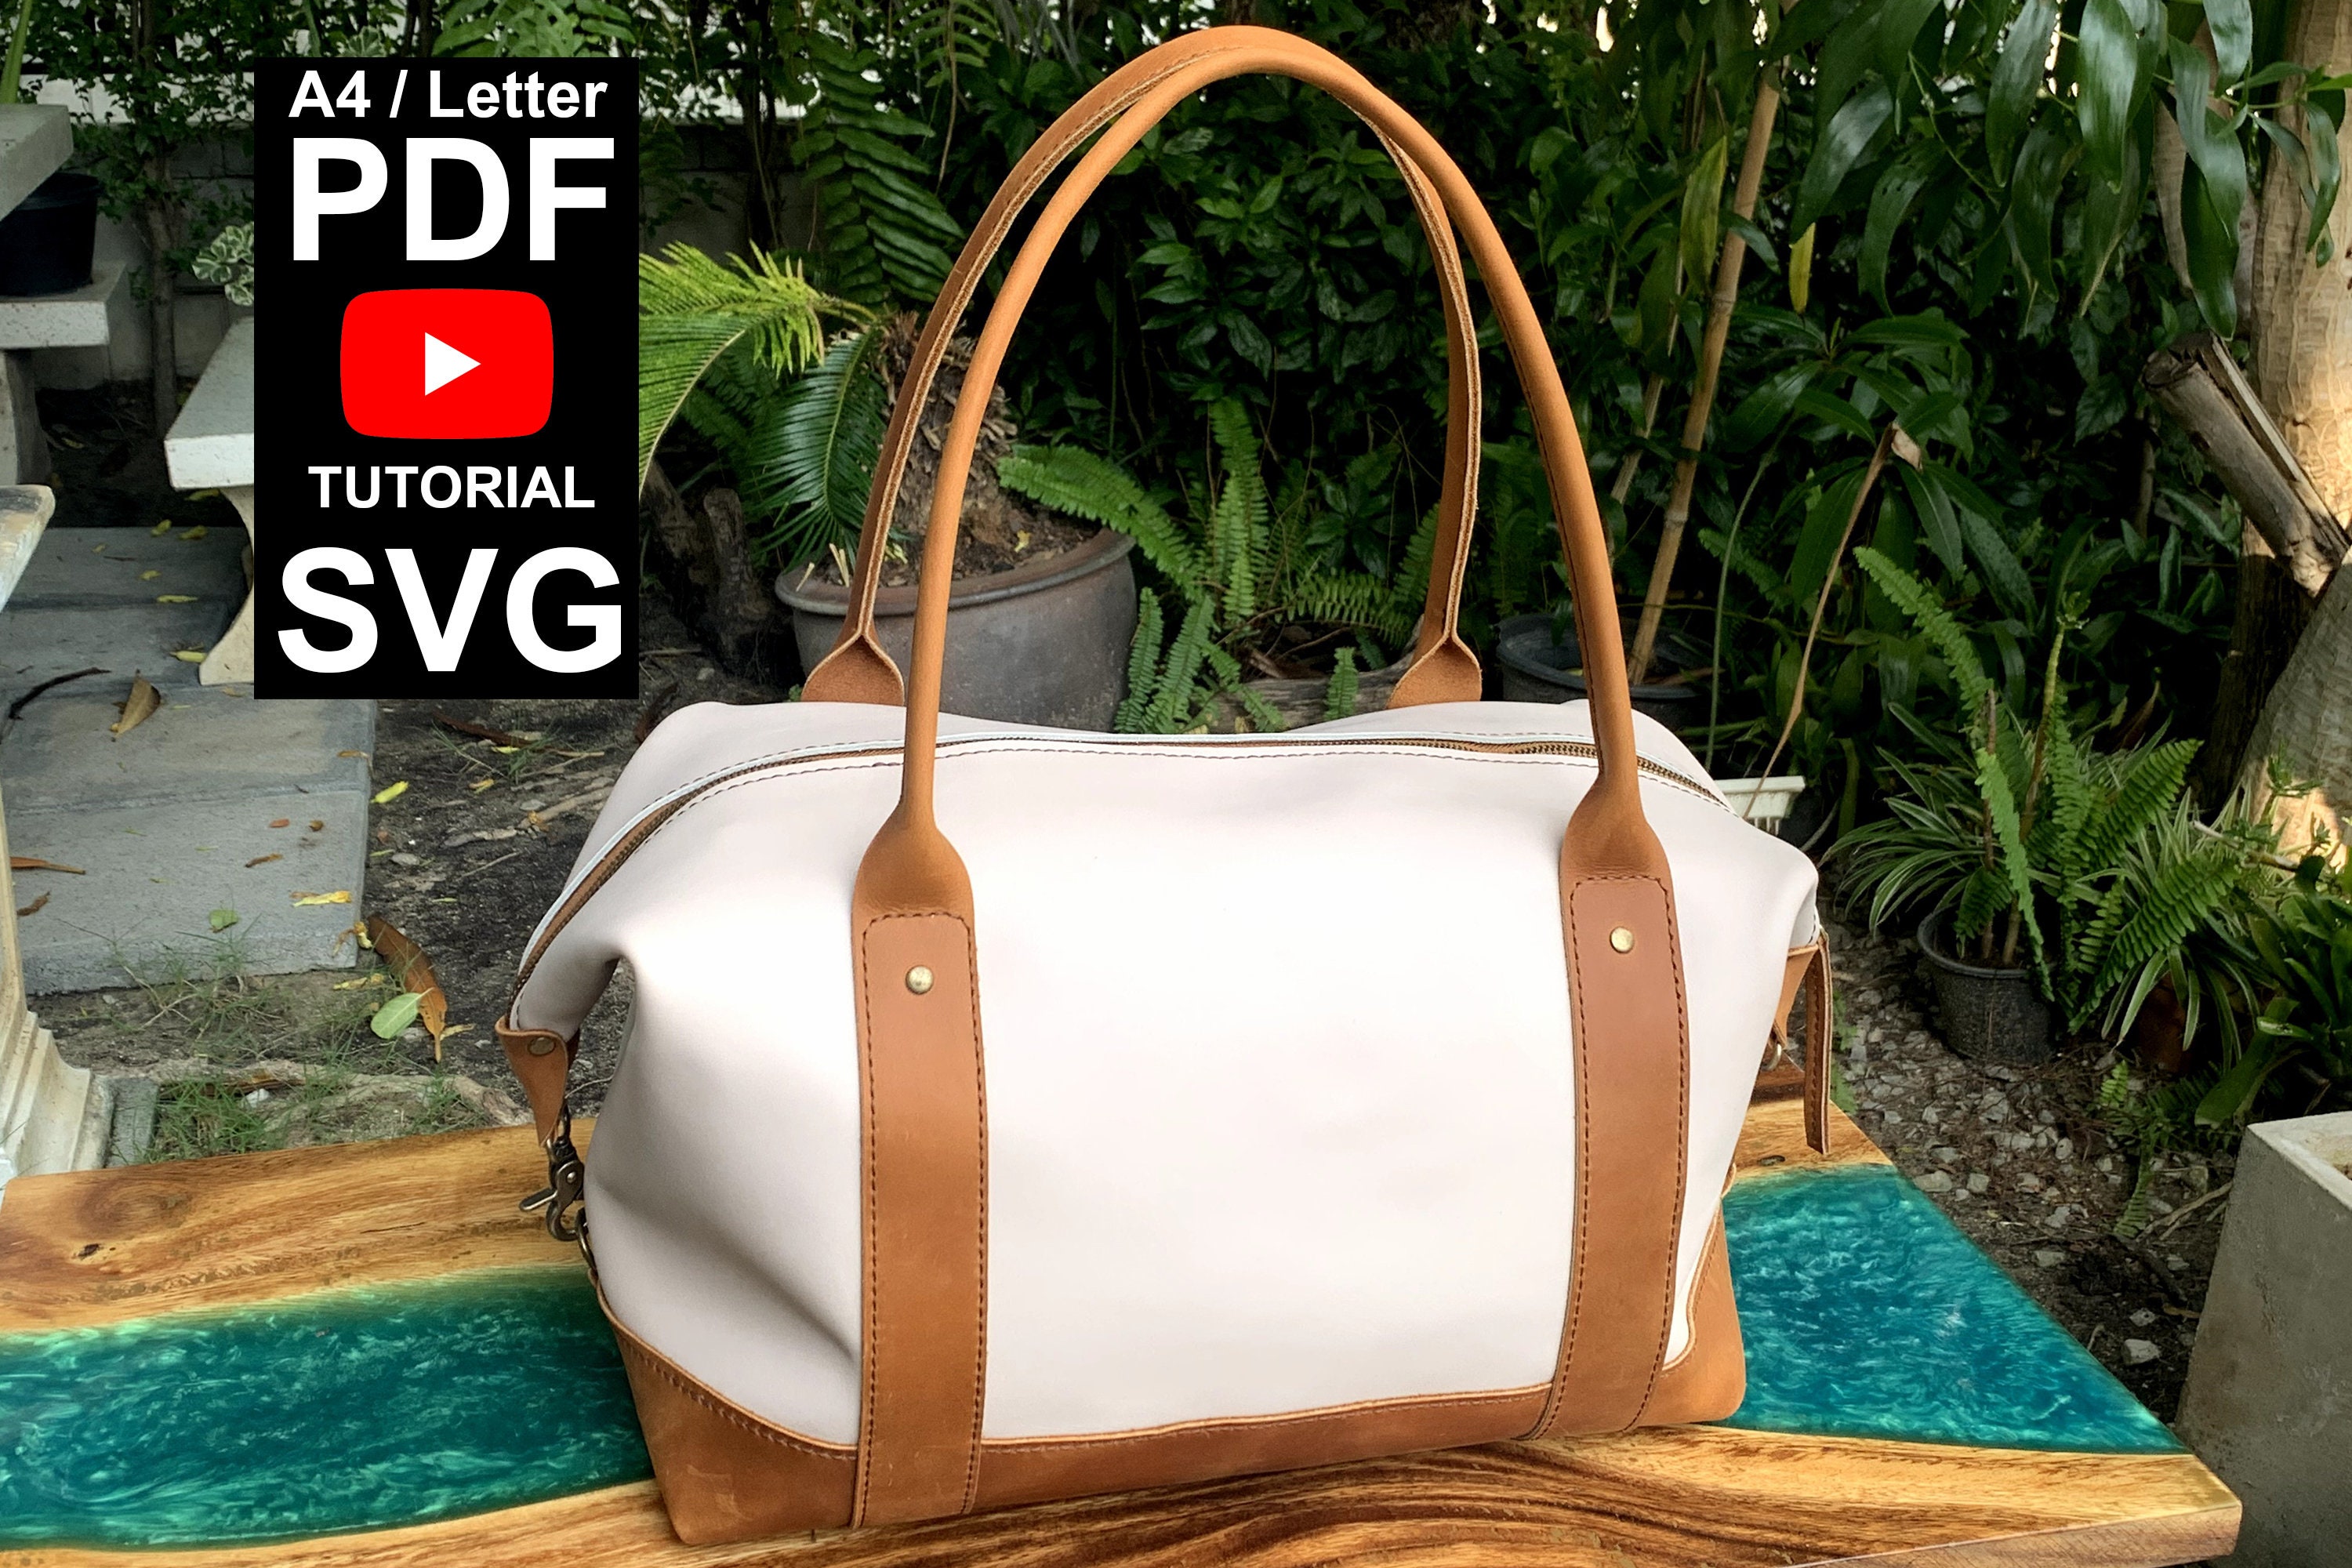 travel handmade: duffle bag pattern review + a giveaway! / LBG STUDIO